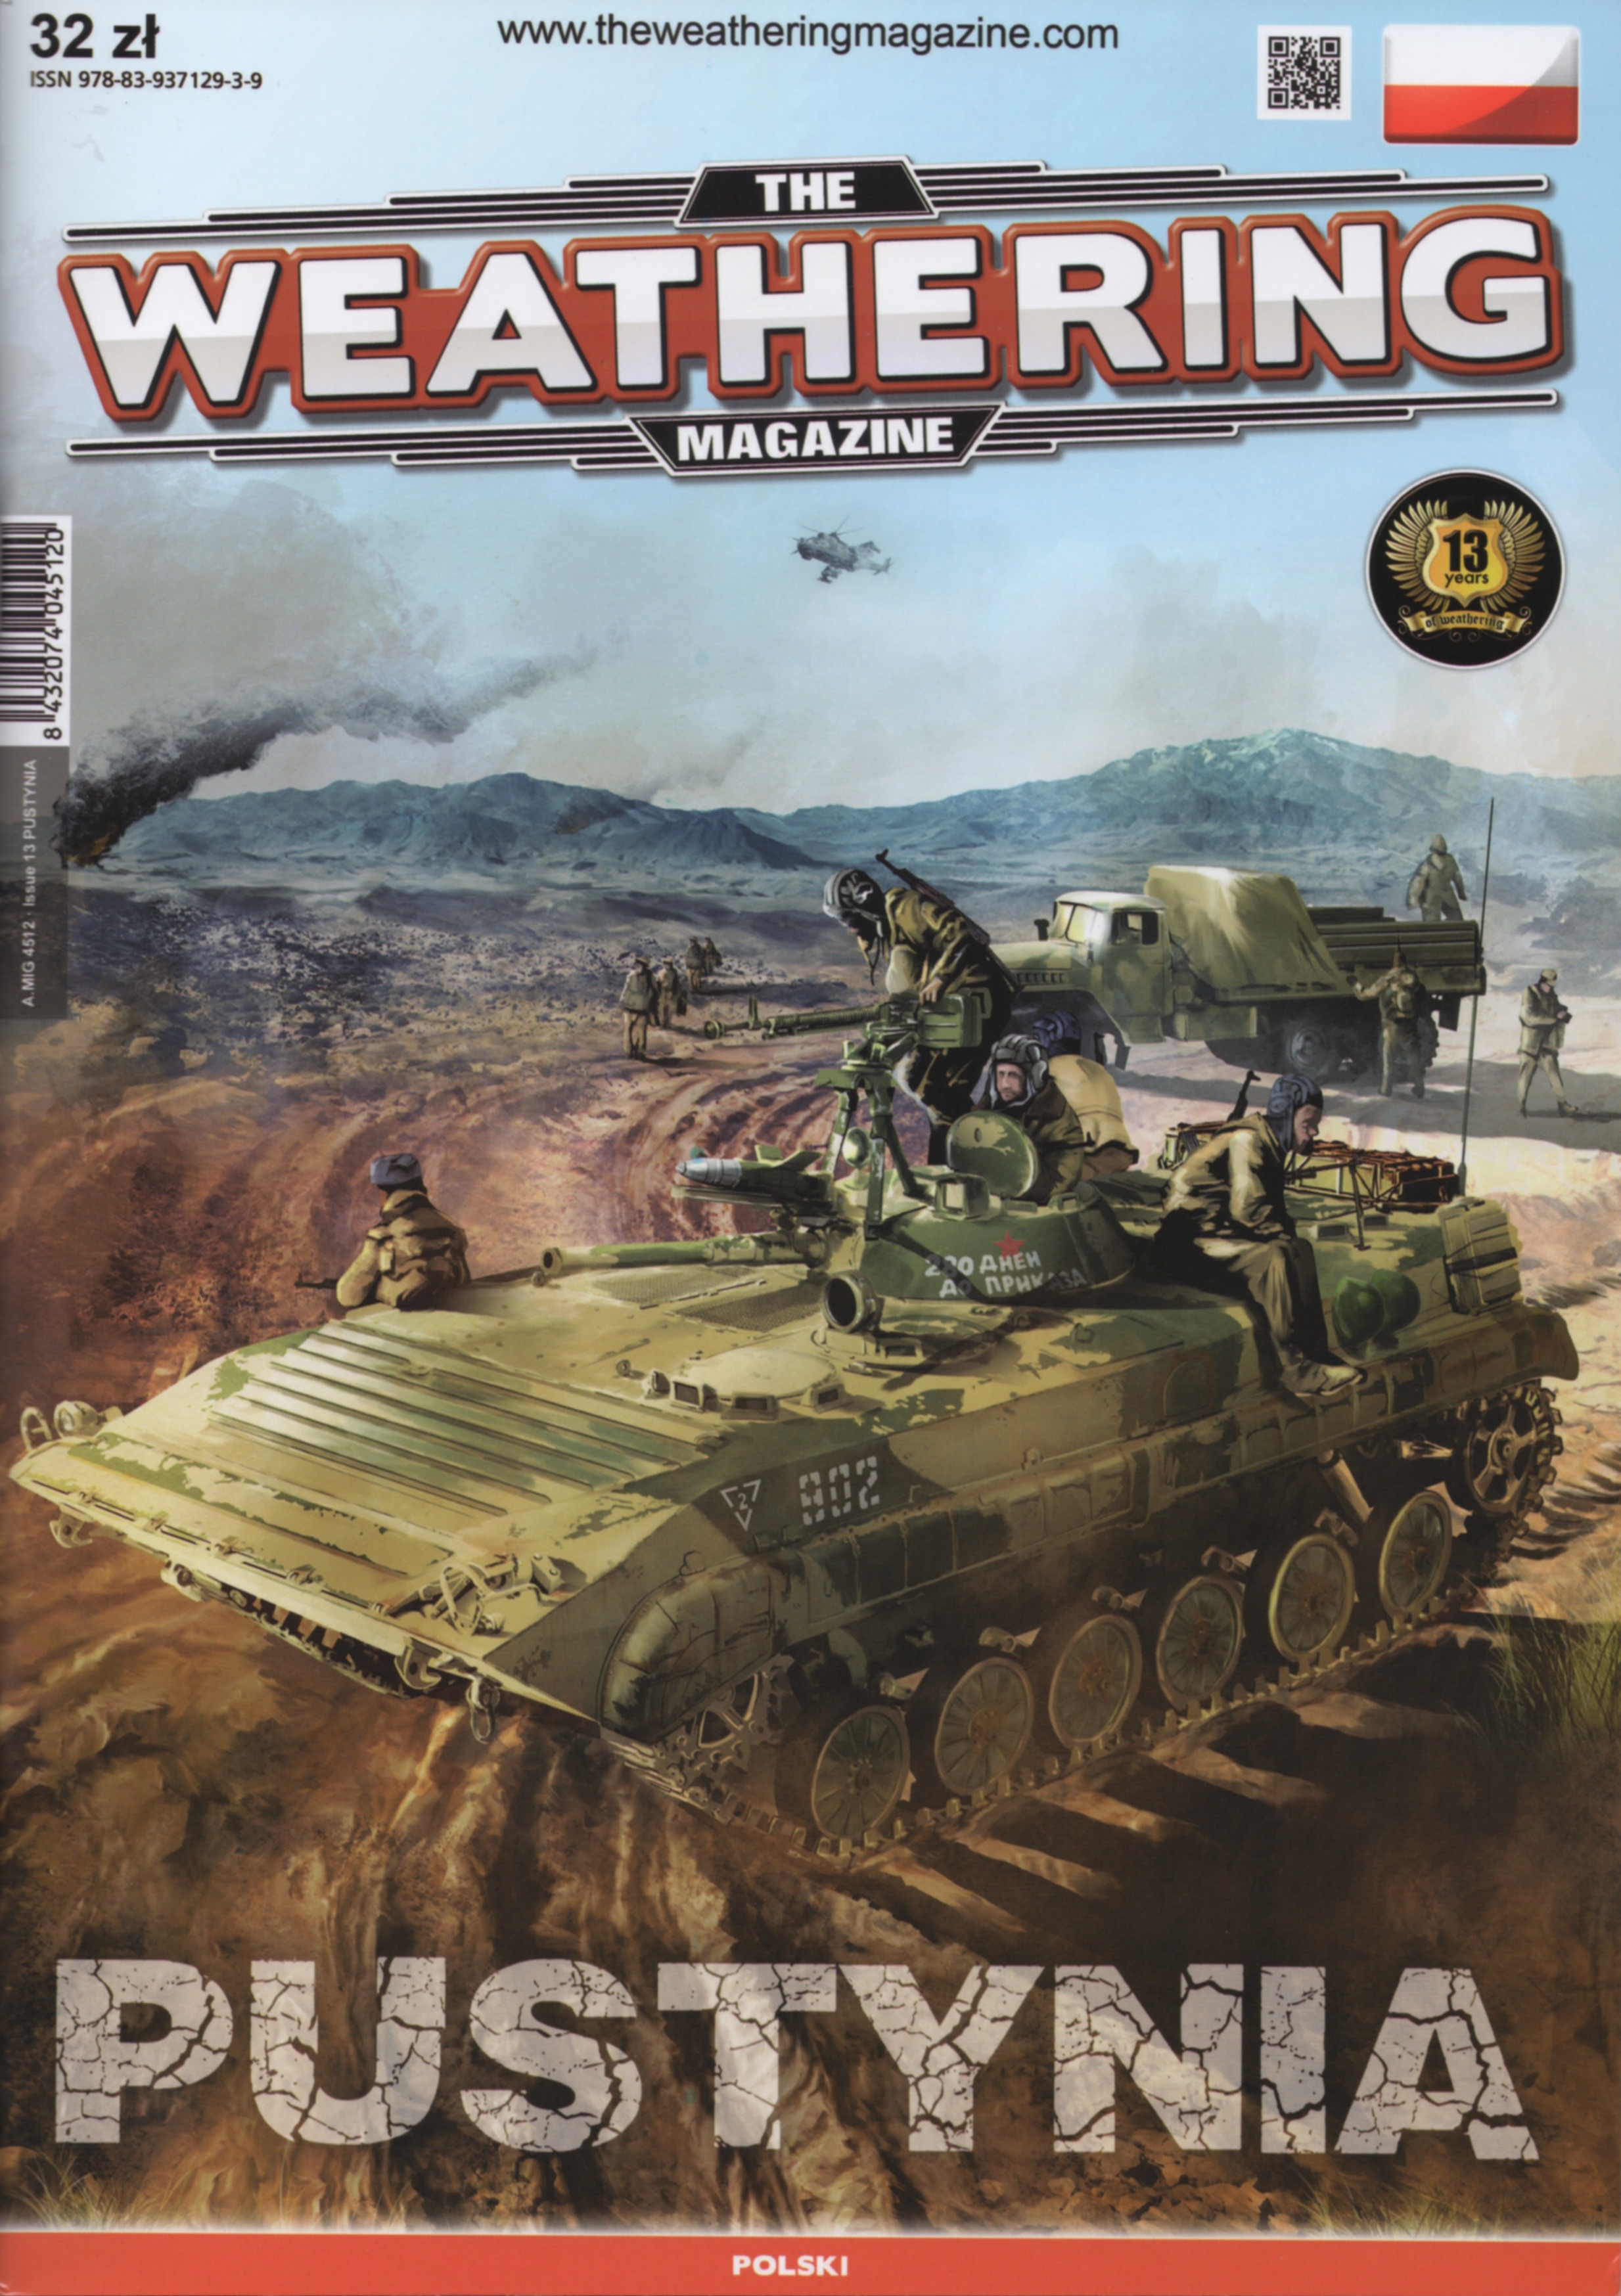 The Weathering Magazine 12 - Pustynia